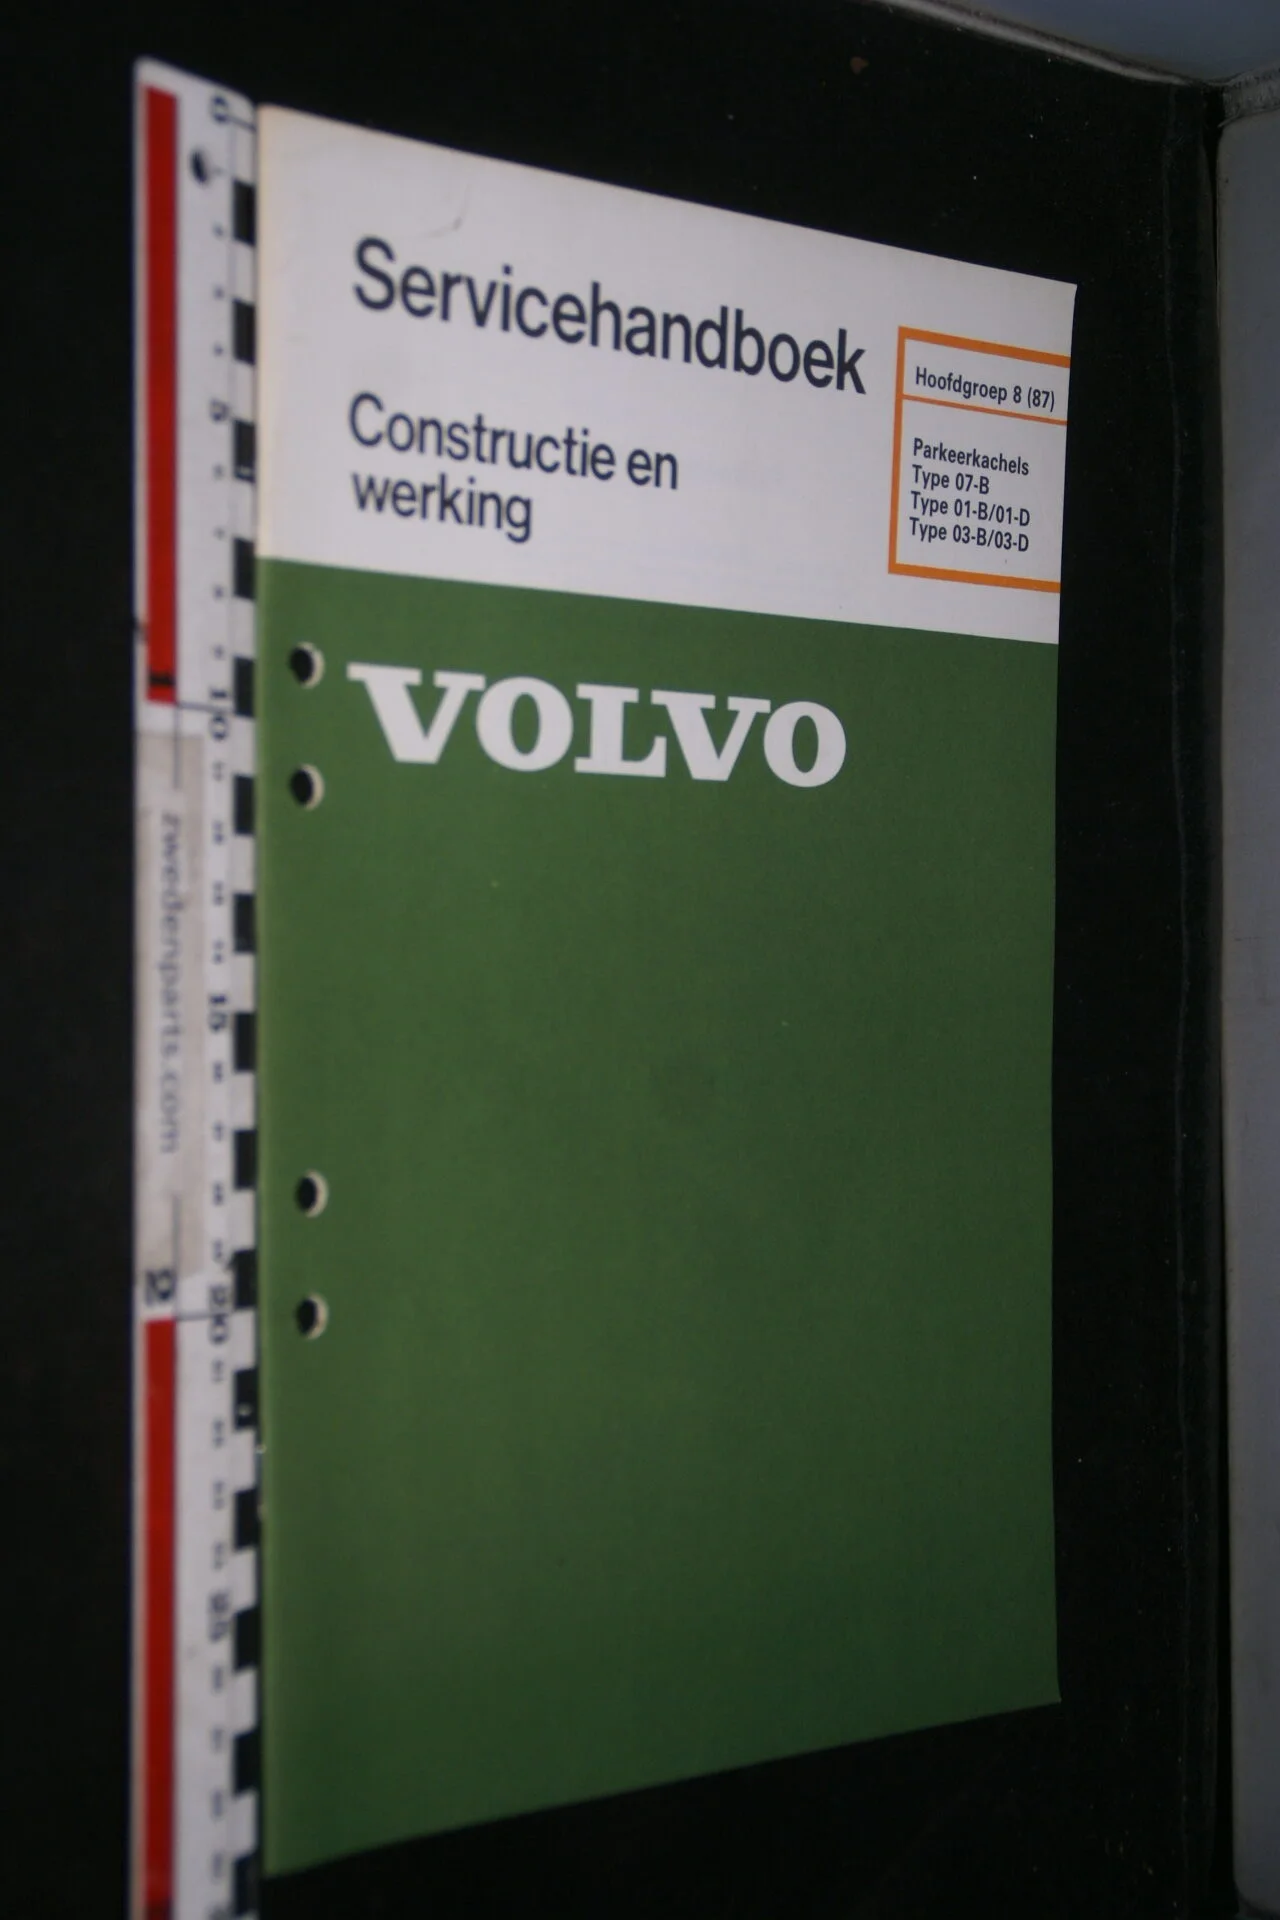 DSC02811 1983 origineel werkplaatsboek 8(87) Volvo parkeerkachel, 1 van 600, nr TP 30211-2-b2d6a0be